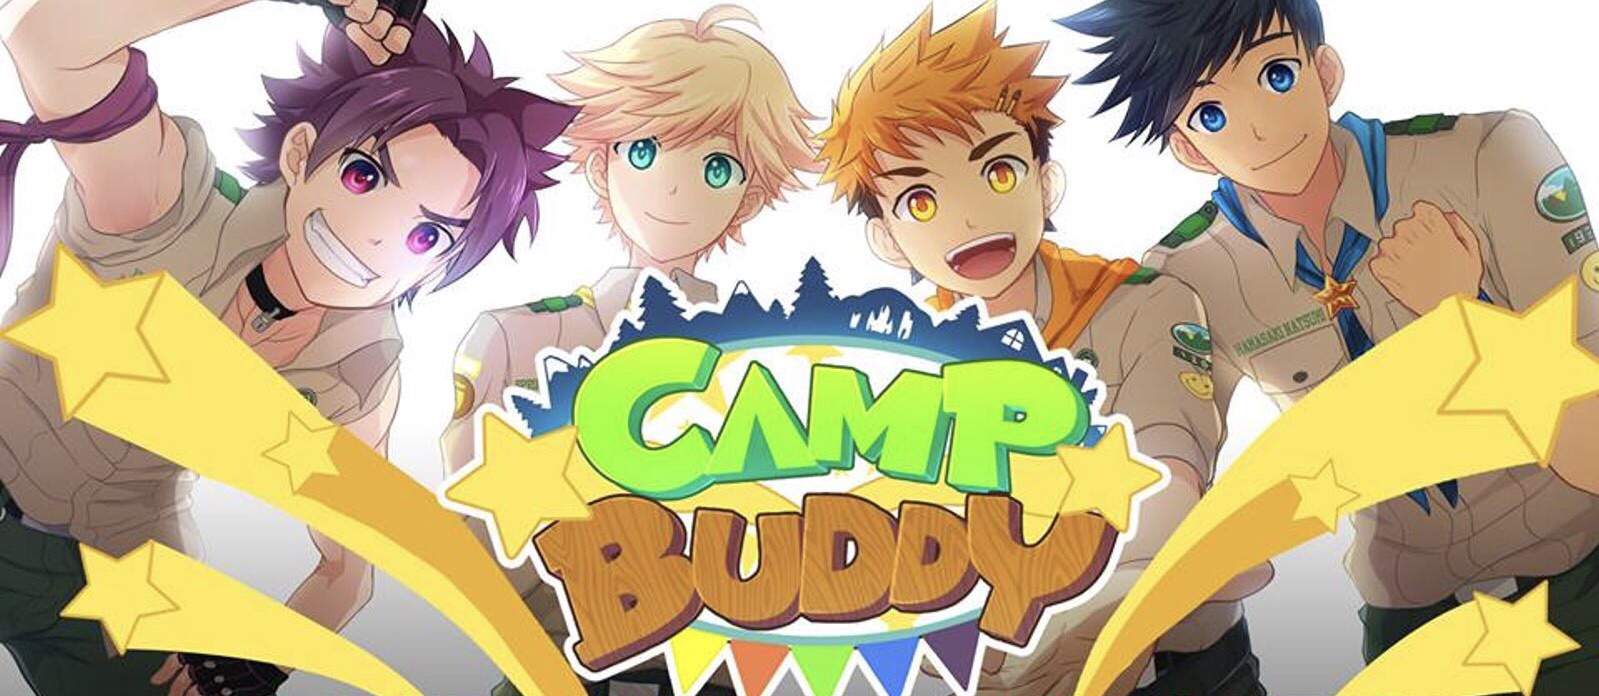 Camp buddy gay hentai